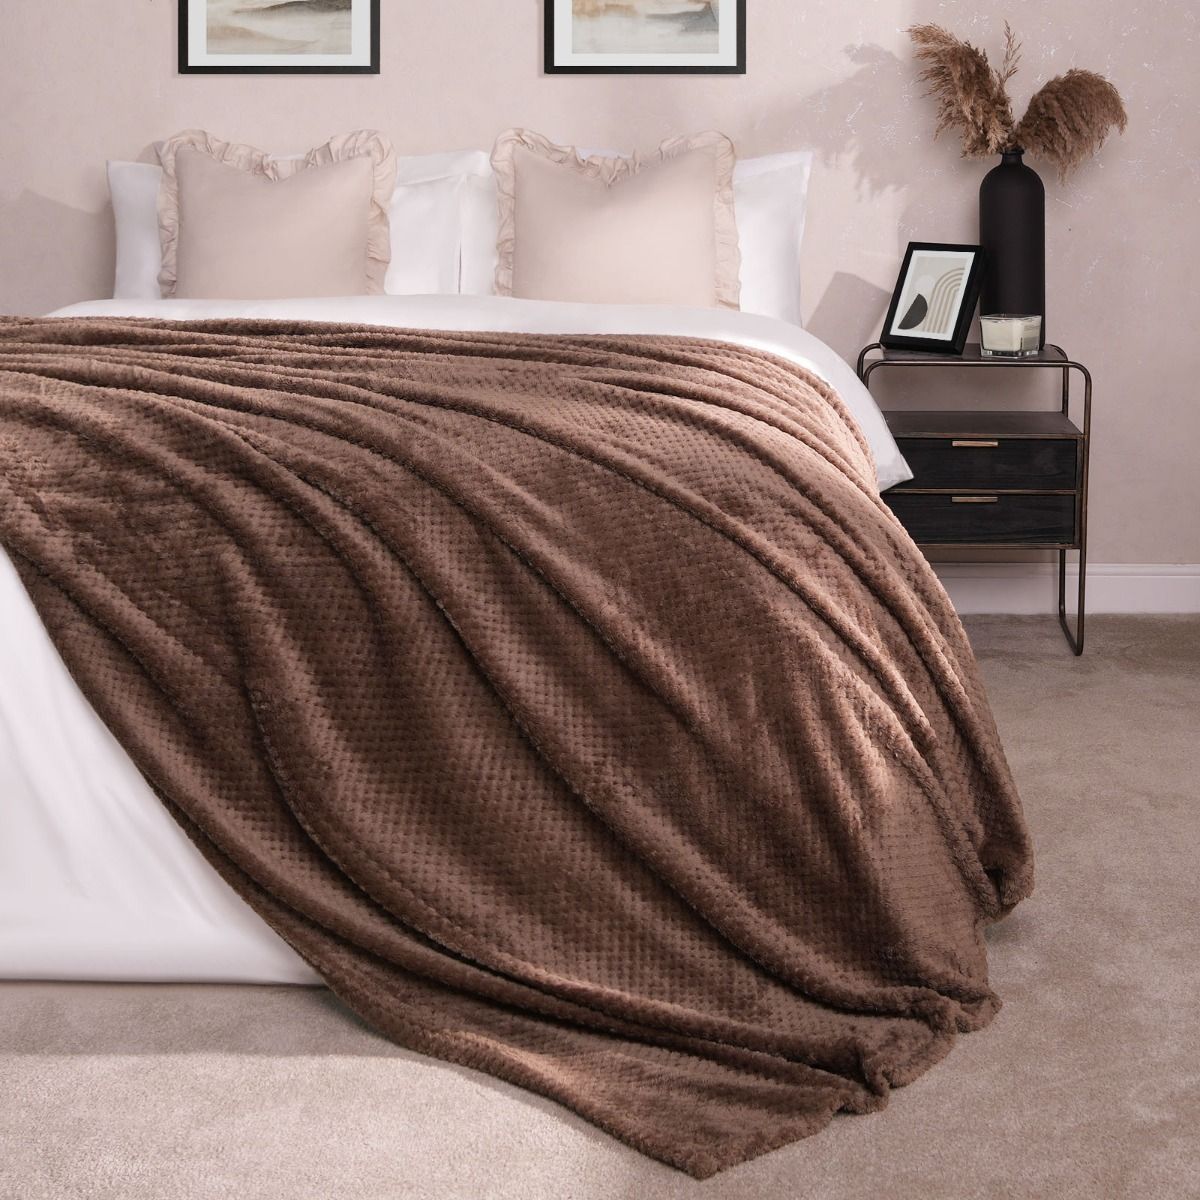 Luxury Waffle Mink Warm Throw Over Sofa Bed Soft Blanket 200 x 240cm Chocolate